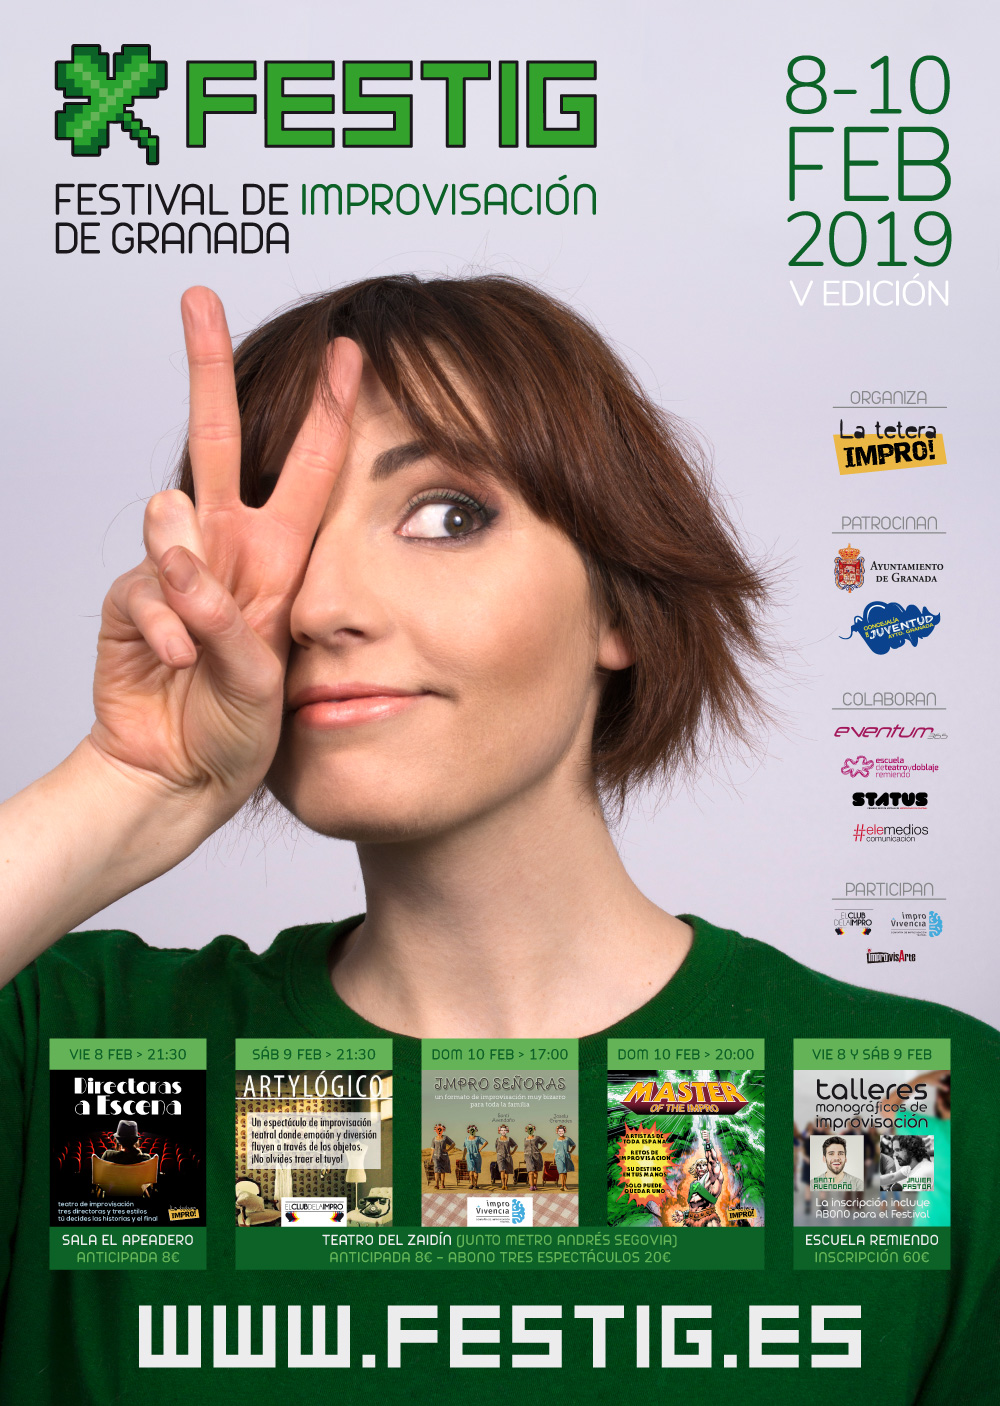 FESTIG 2019 vuelve a Granada